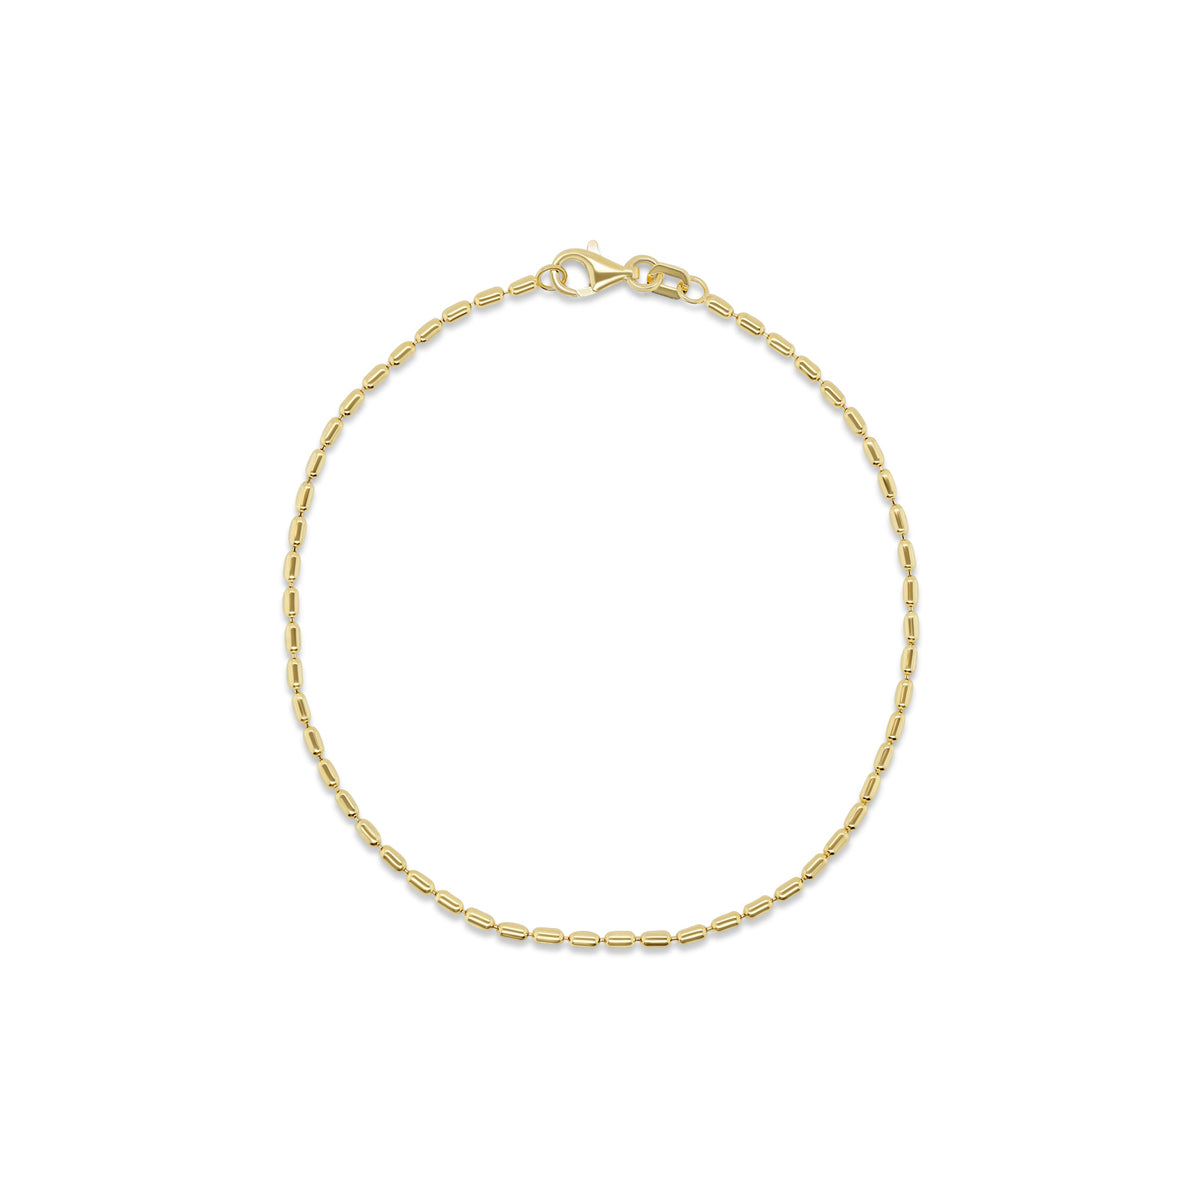 7.5 inch 14k yellow gold long bead chain bracelet